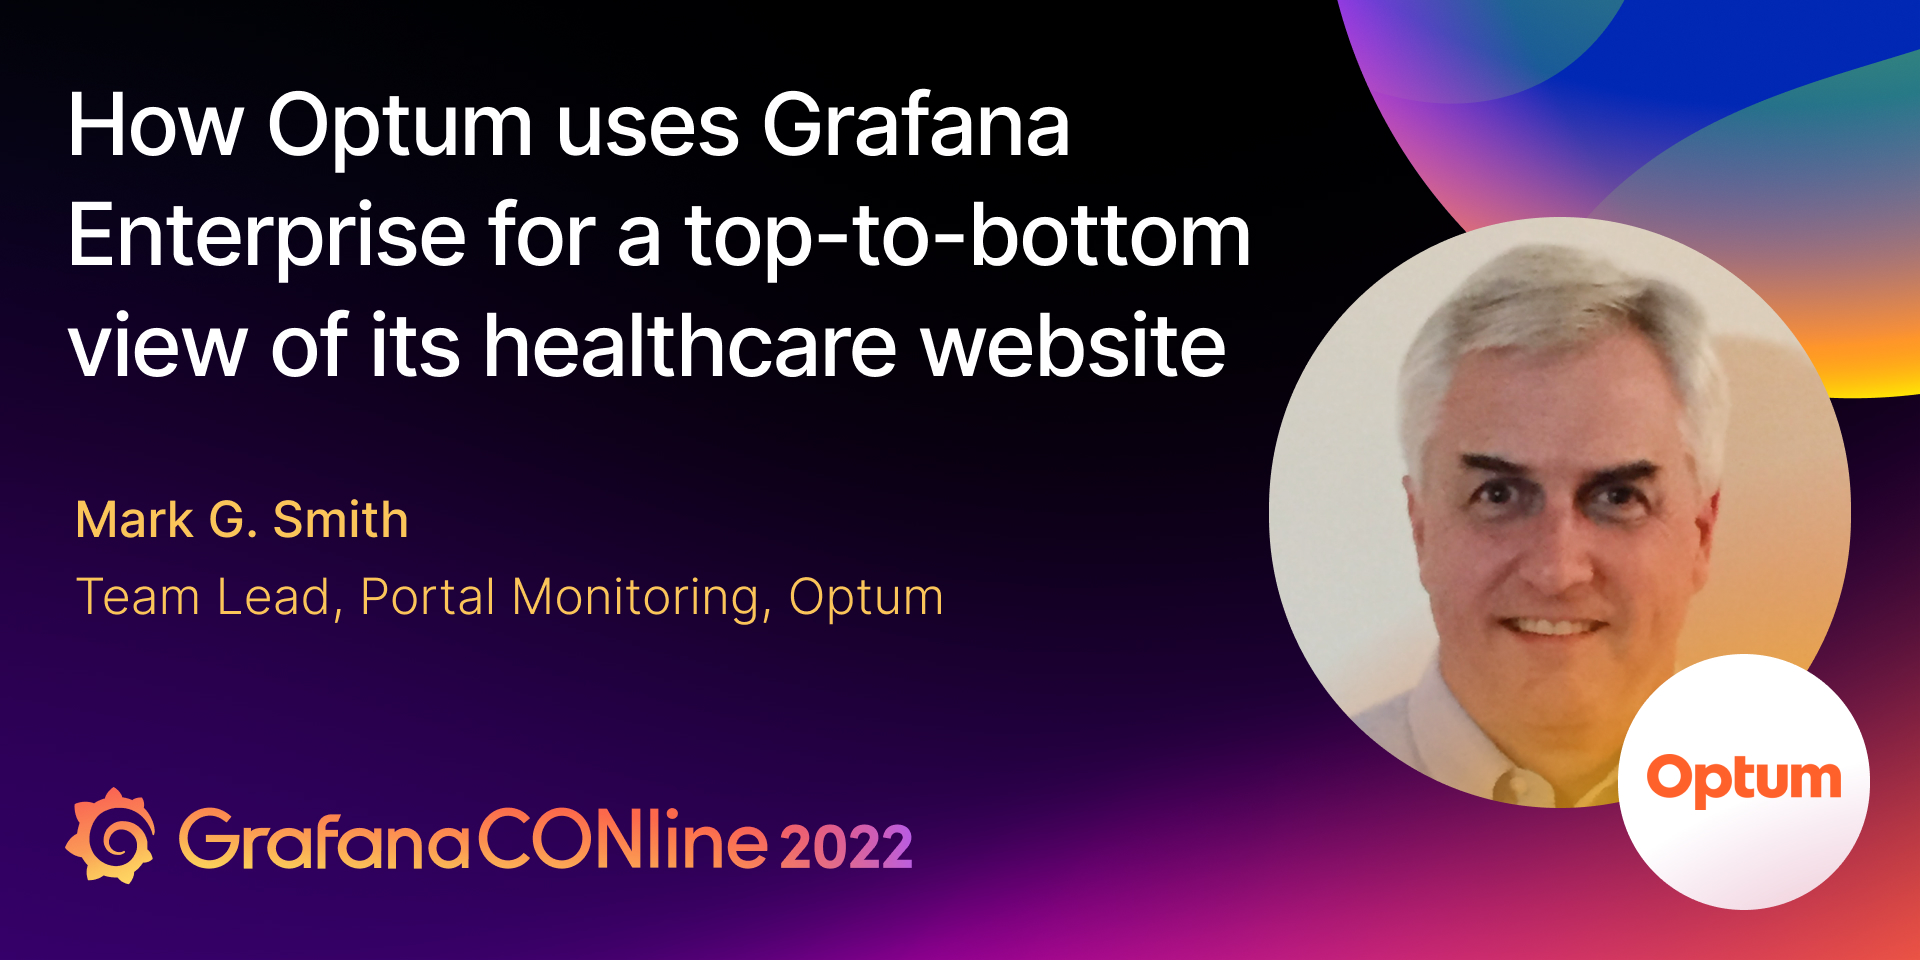 企业用于会话如何Grafana Optum的医疗网站GrafanaCONline 2022